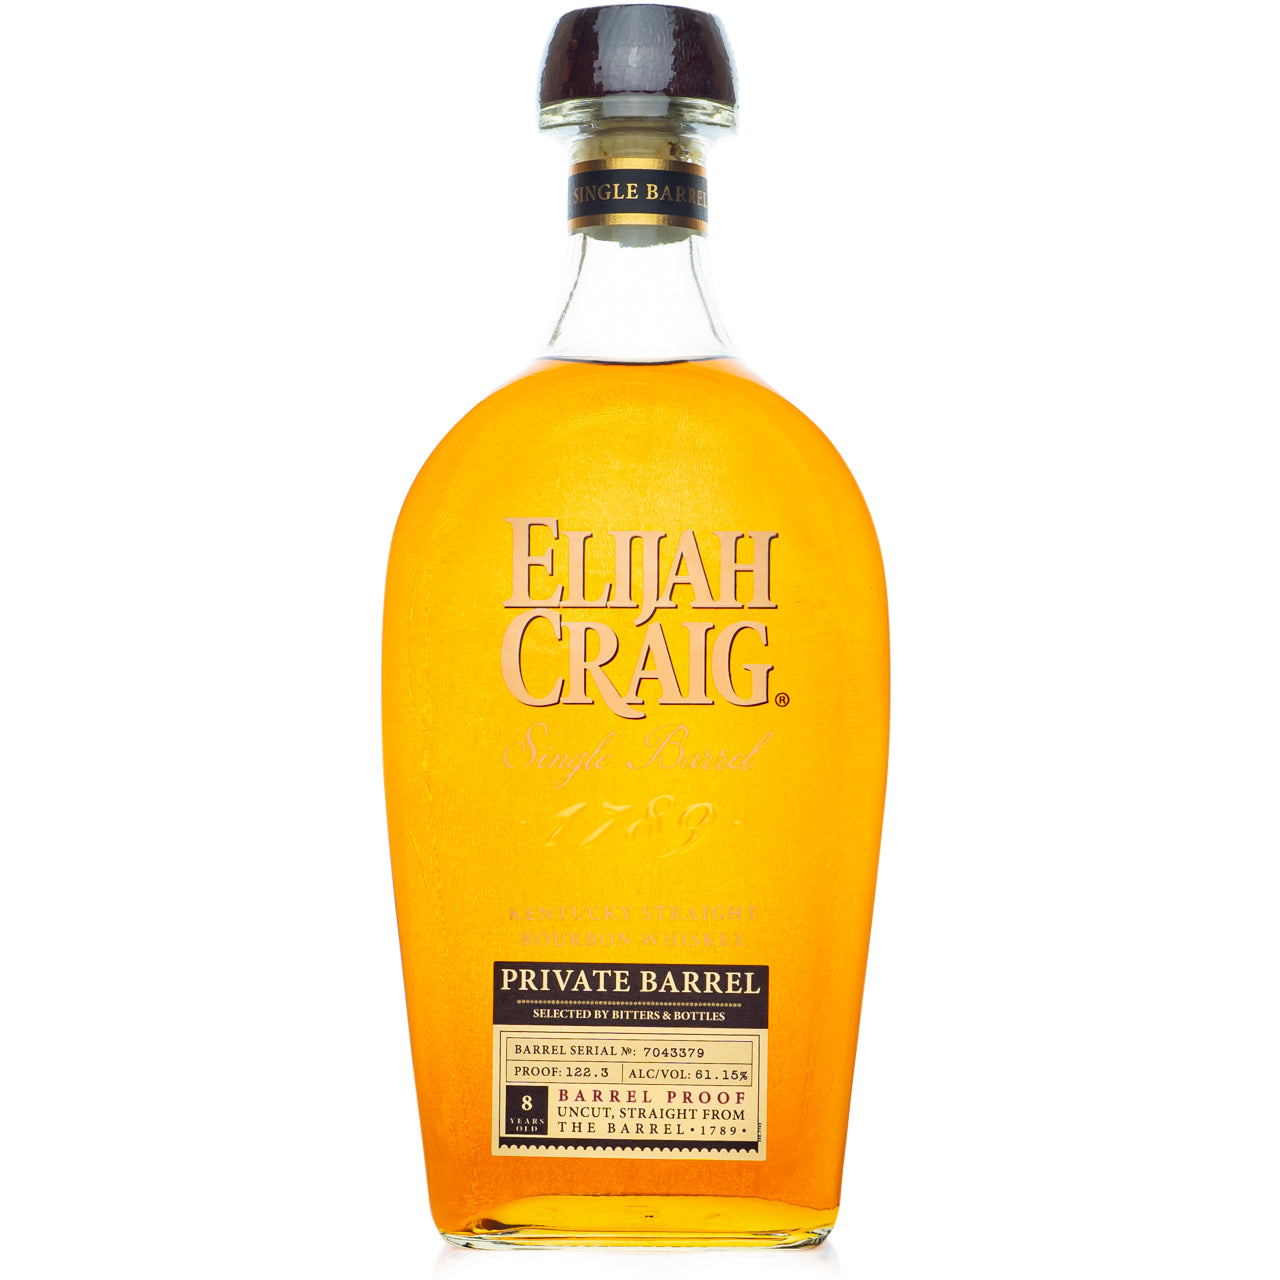 Elijah Craig "B&B 7043379" Single Barrel Proof Bourbon